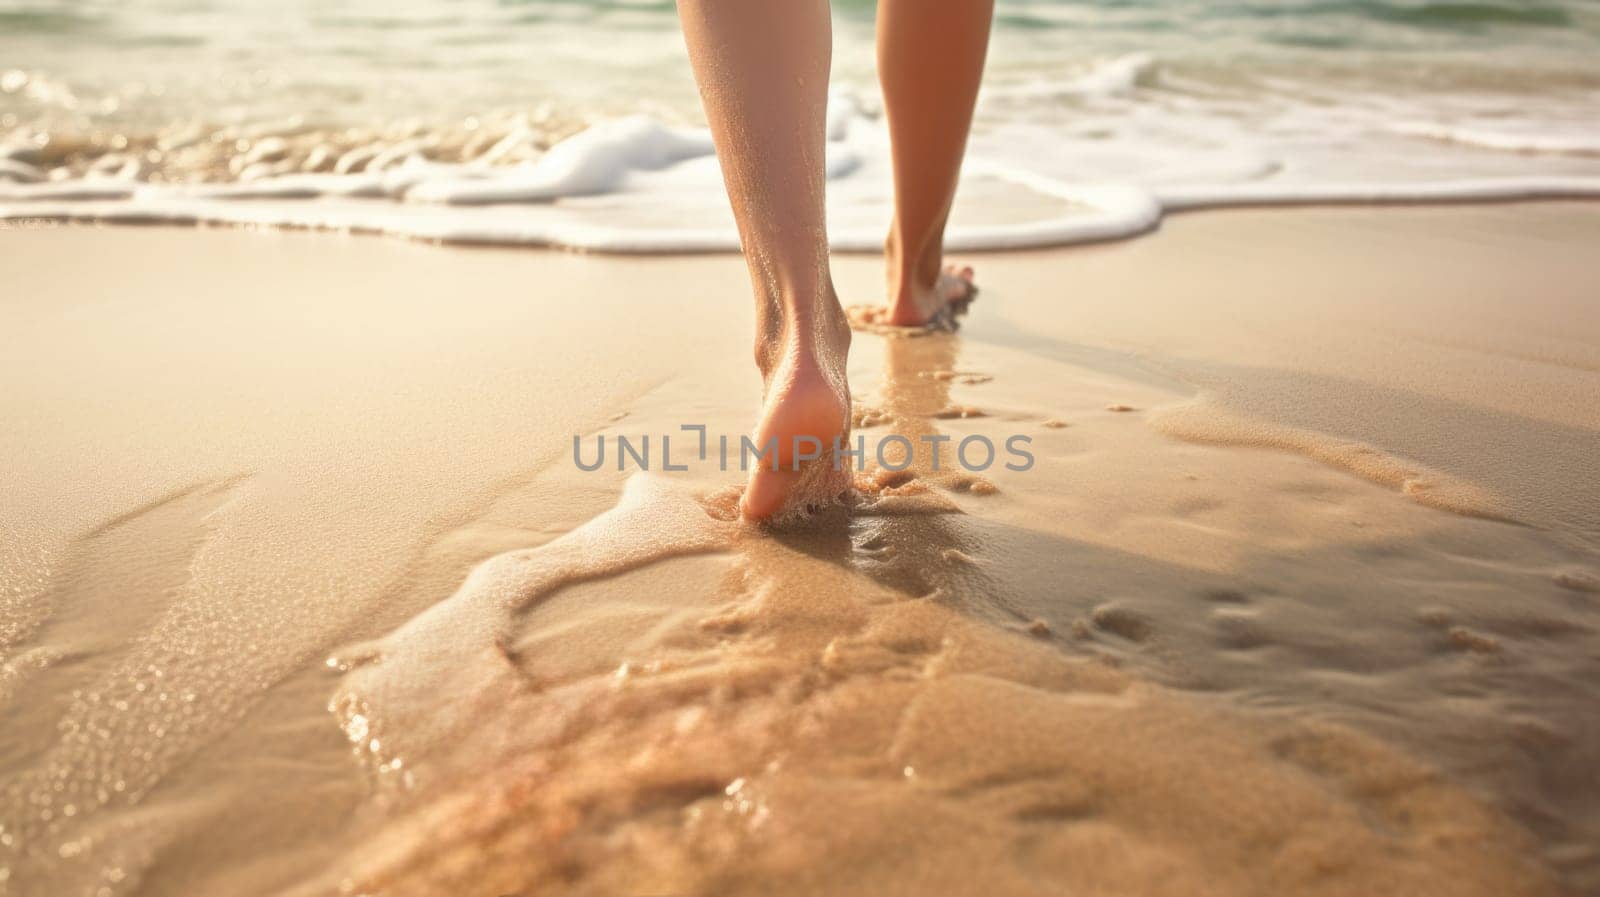 woman walking on the beach, Wet shoreline sand with barefoot prints, ai by rachellaiyl